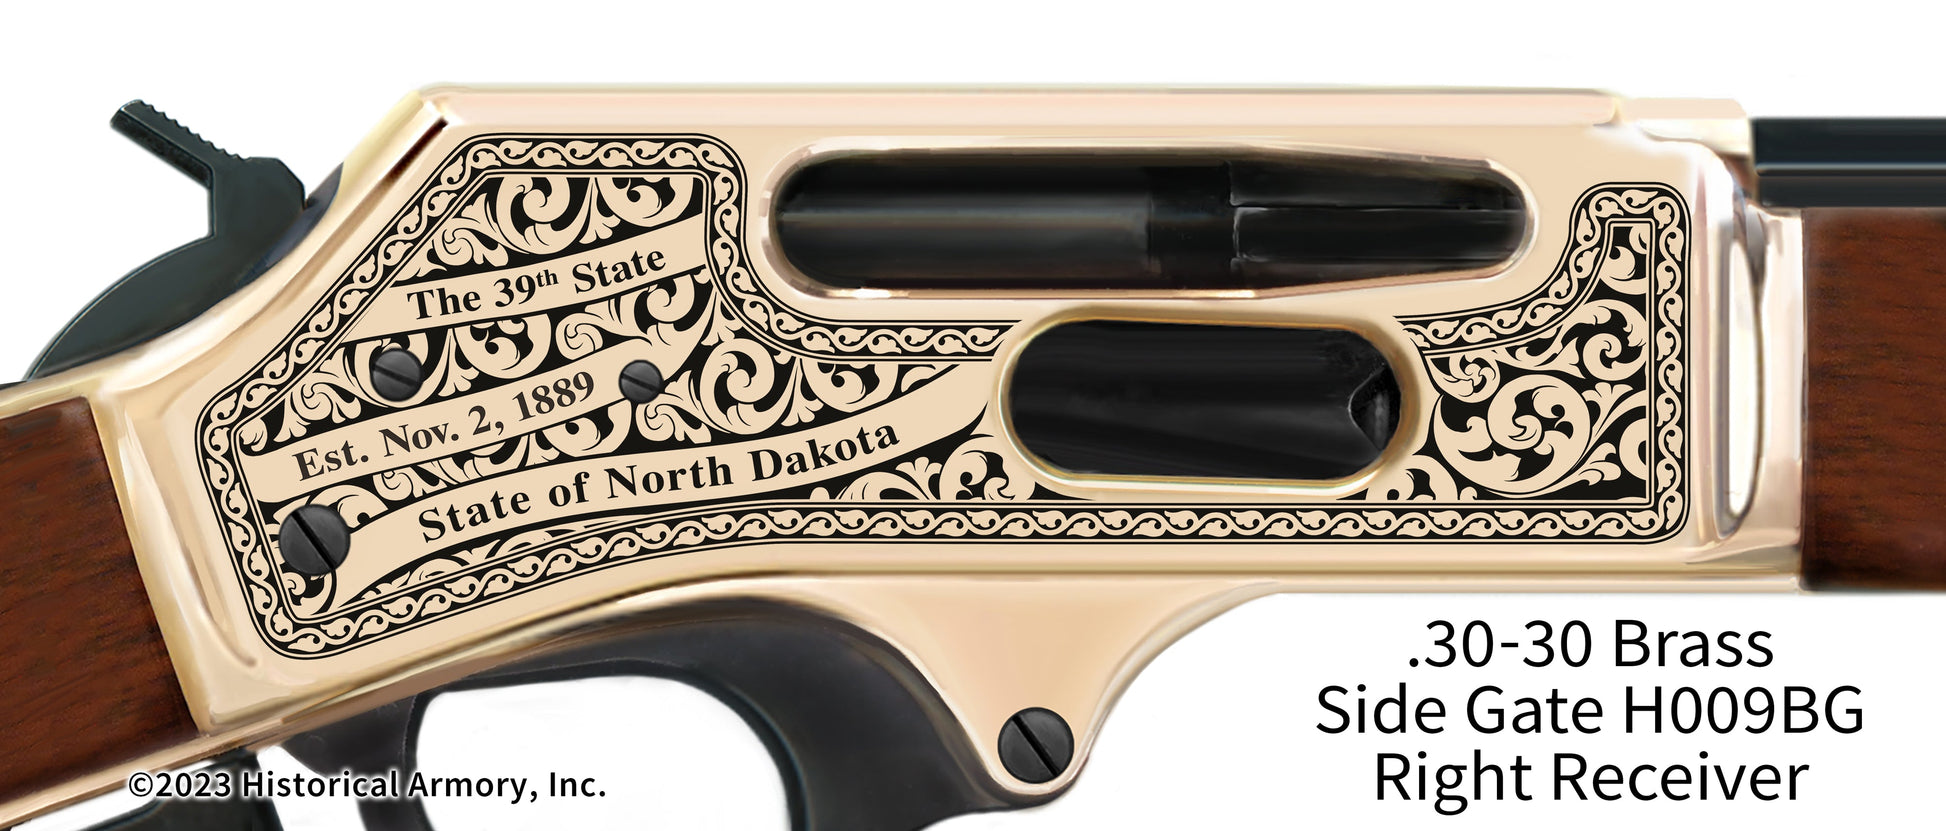 Cass County North Dakota Engraved Henry .30-30 Brass Side Gate Rifle